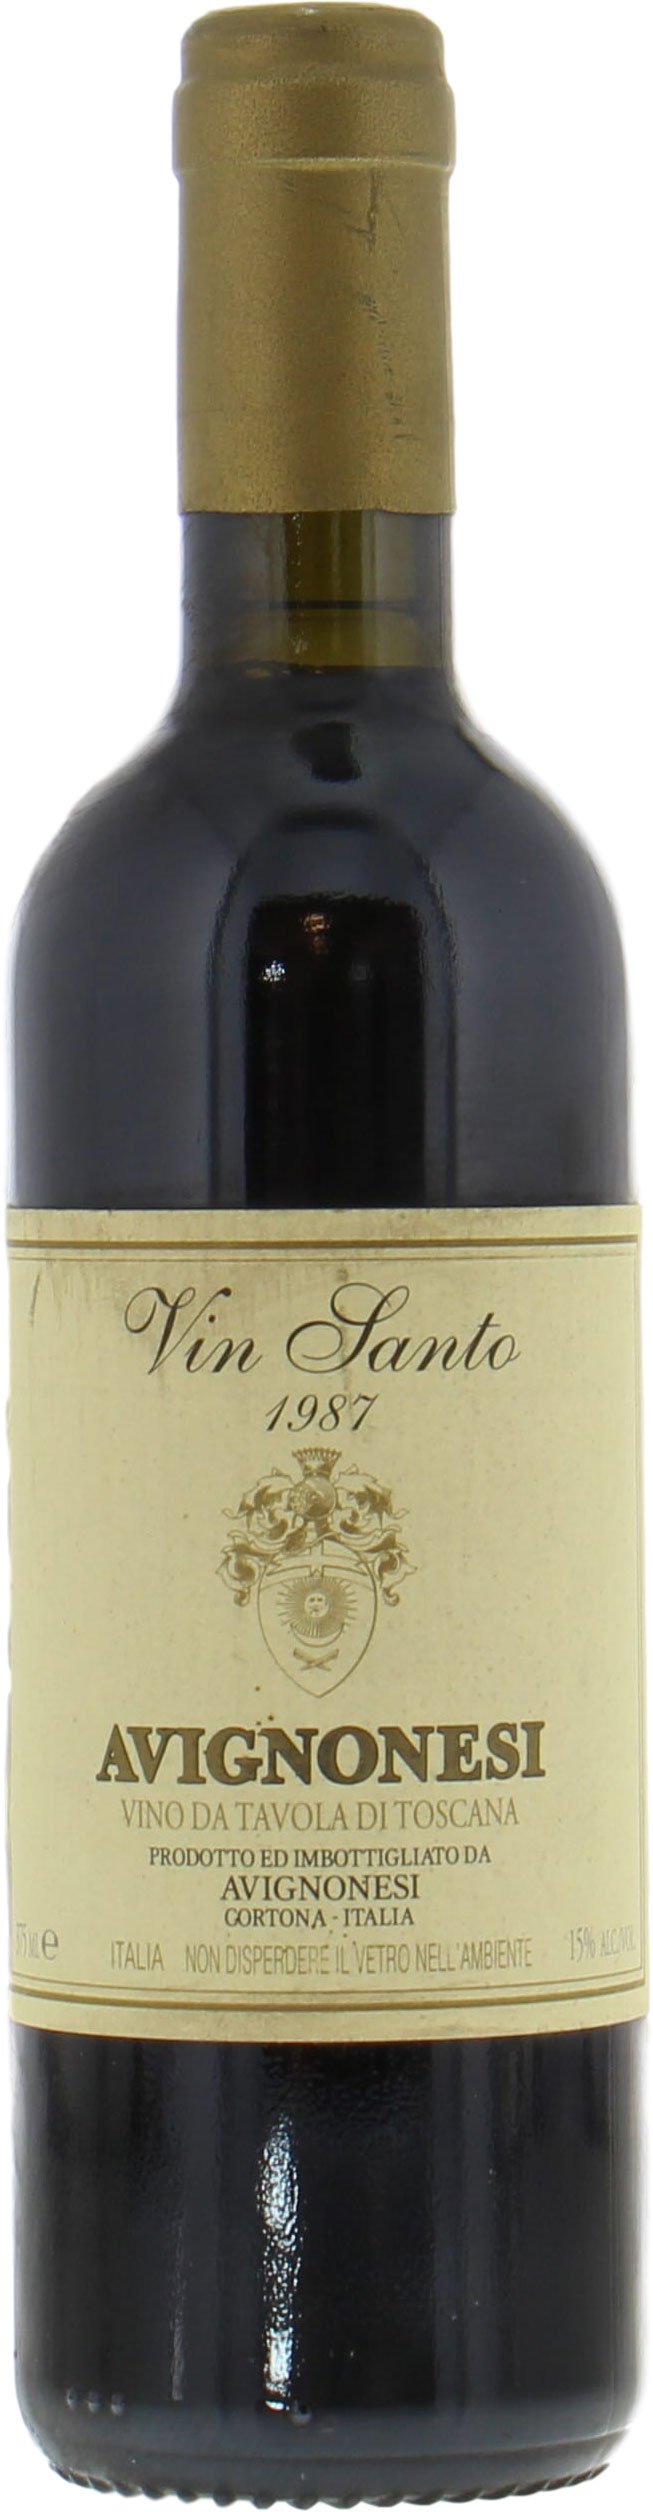 Avignonesi - Vin Santo 1987 Perfect